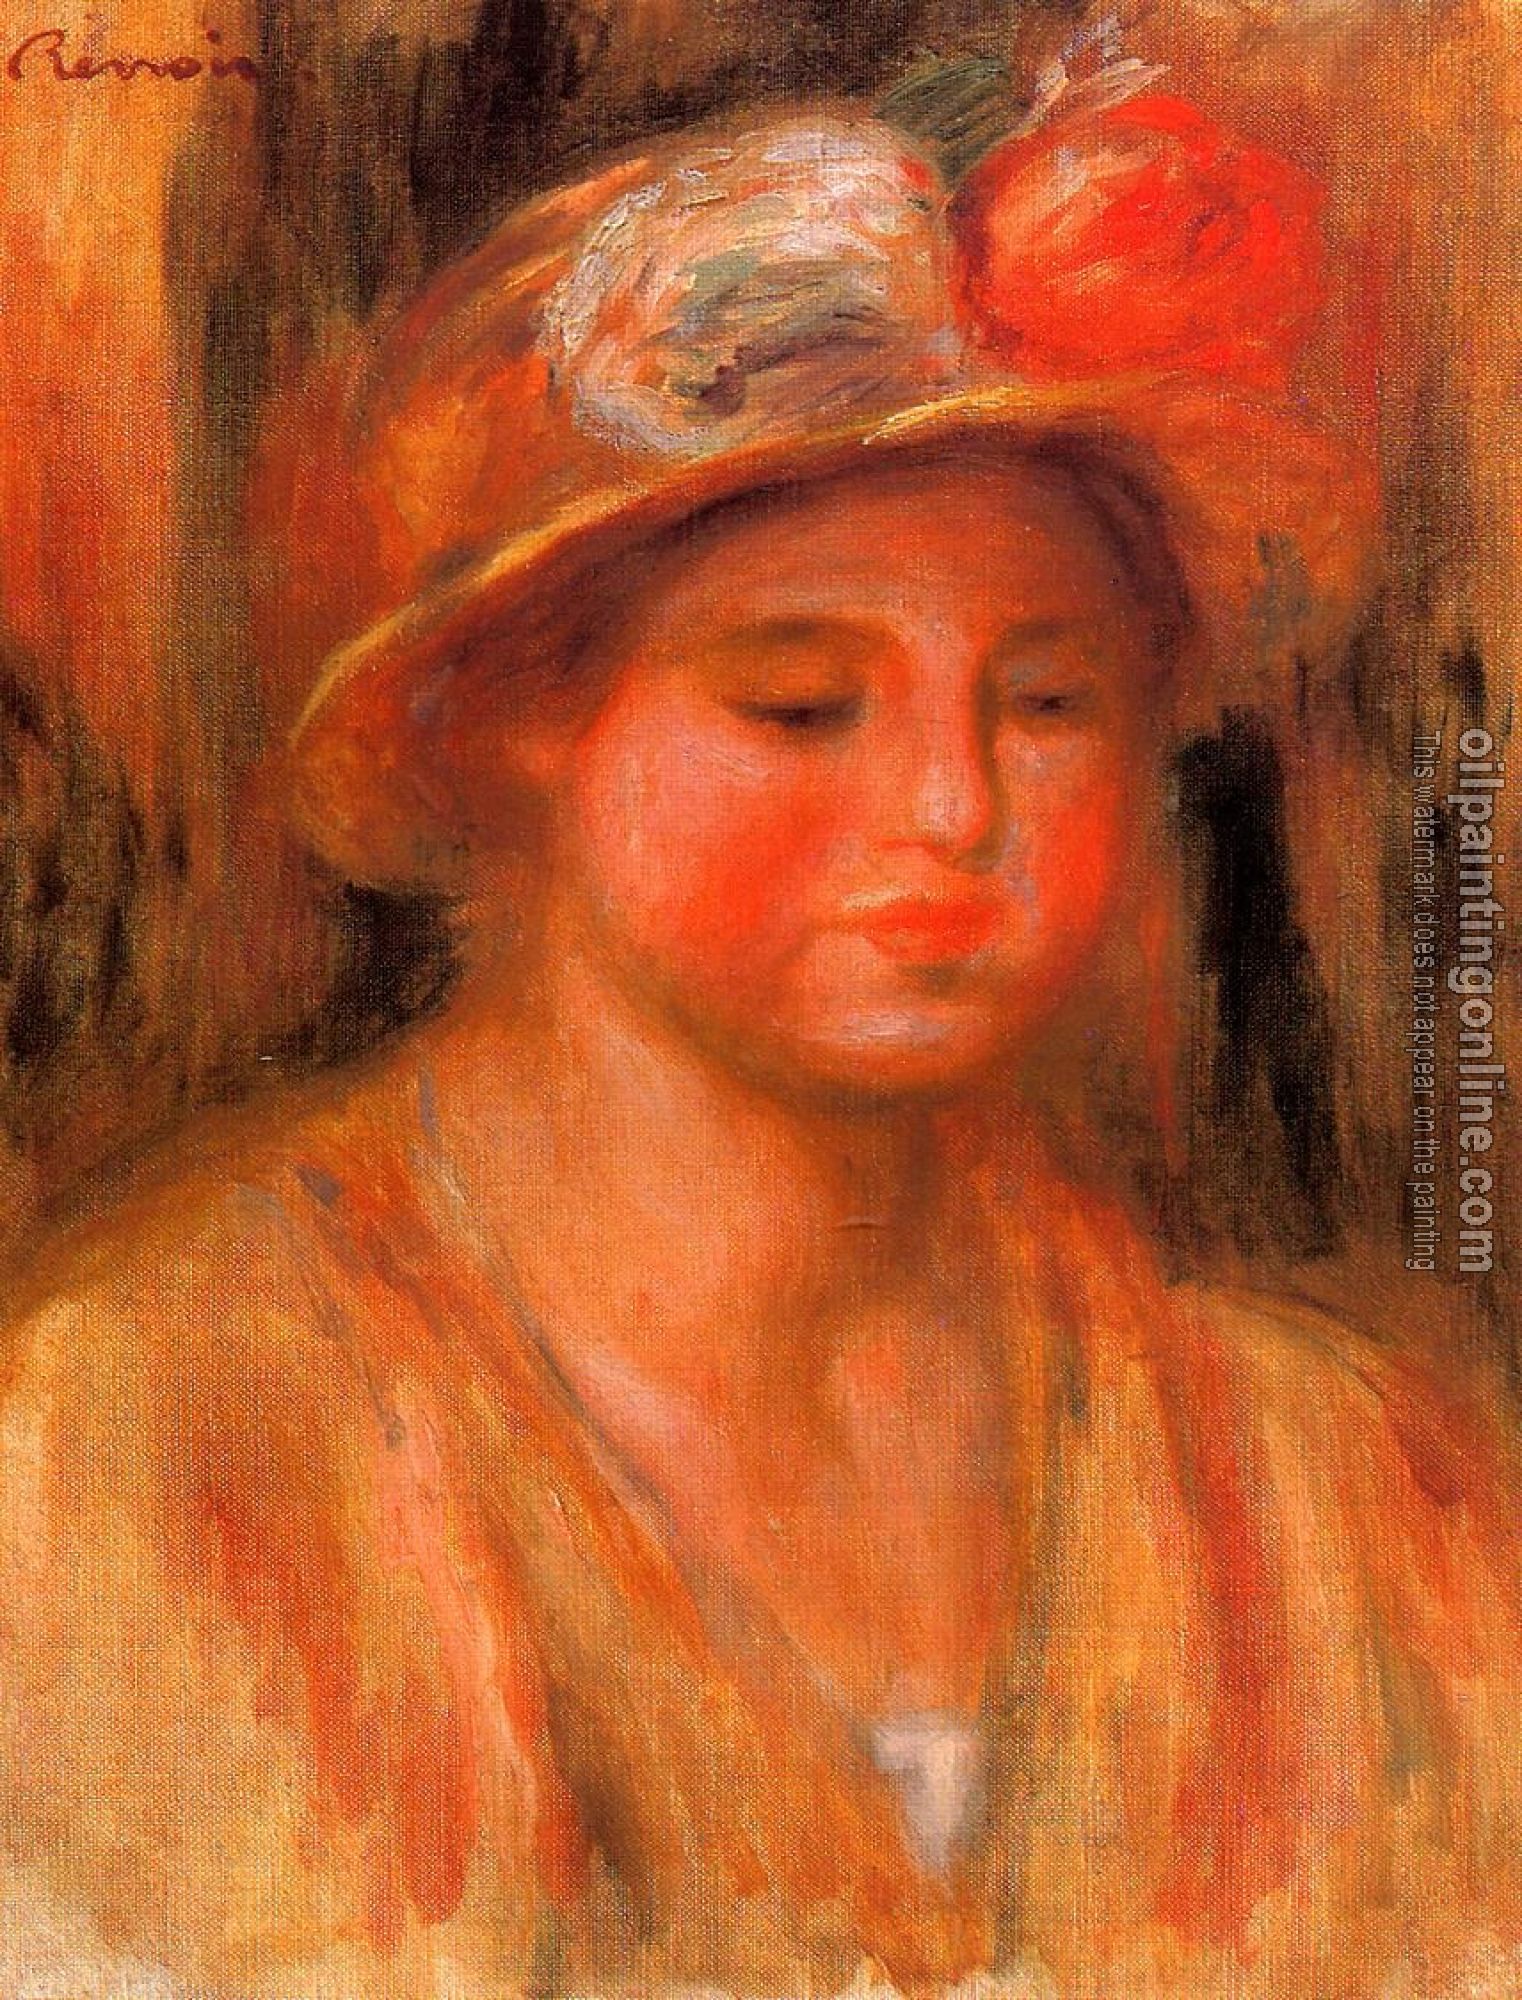 Renoir, Pierre Auguste - Portrait of a Woman